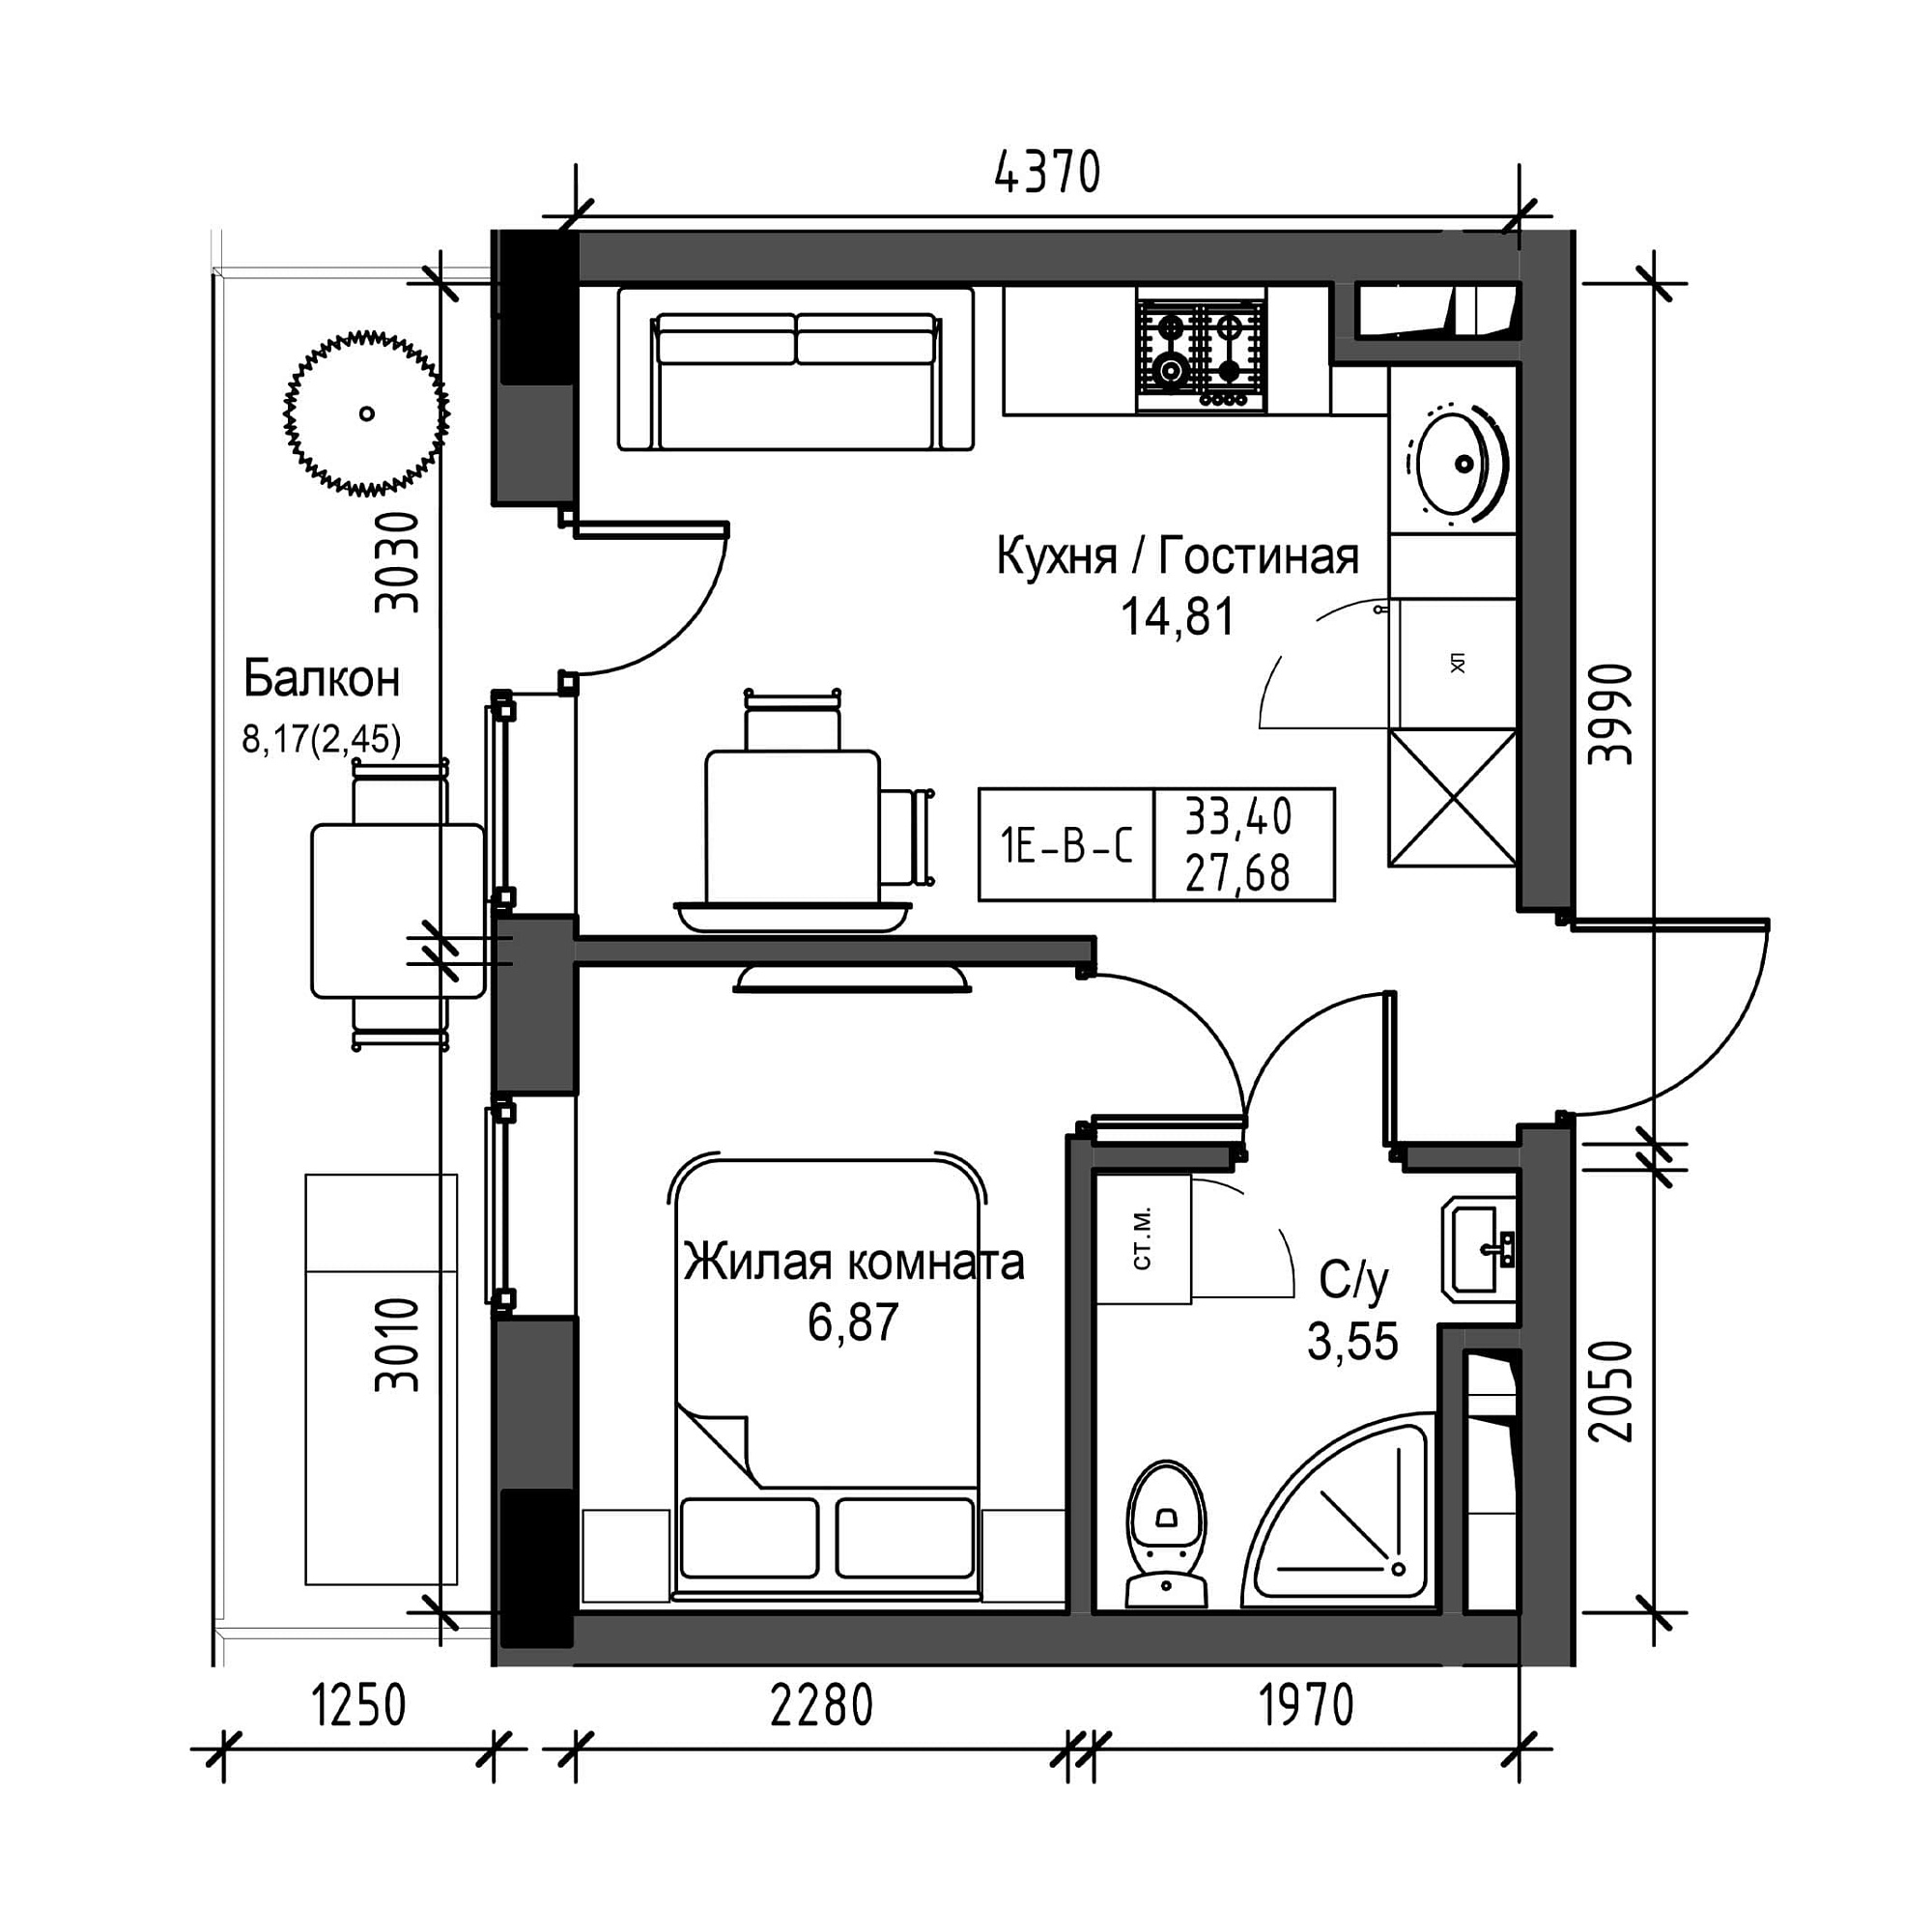 Планування 1-к квартира площею 27.68м2, UM-001-04/0019.